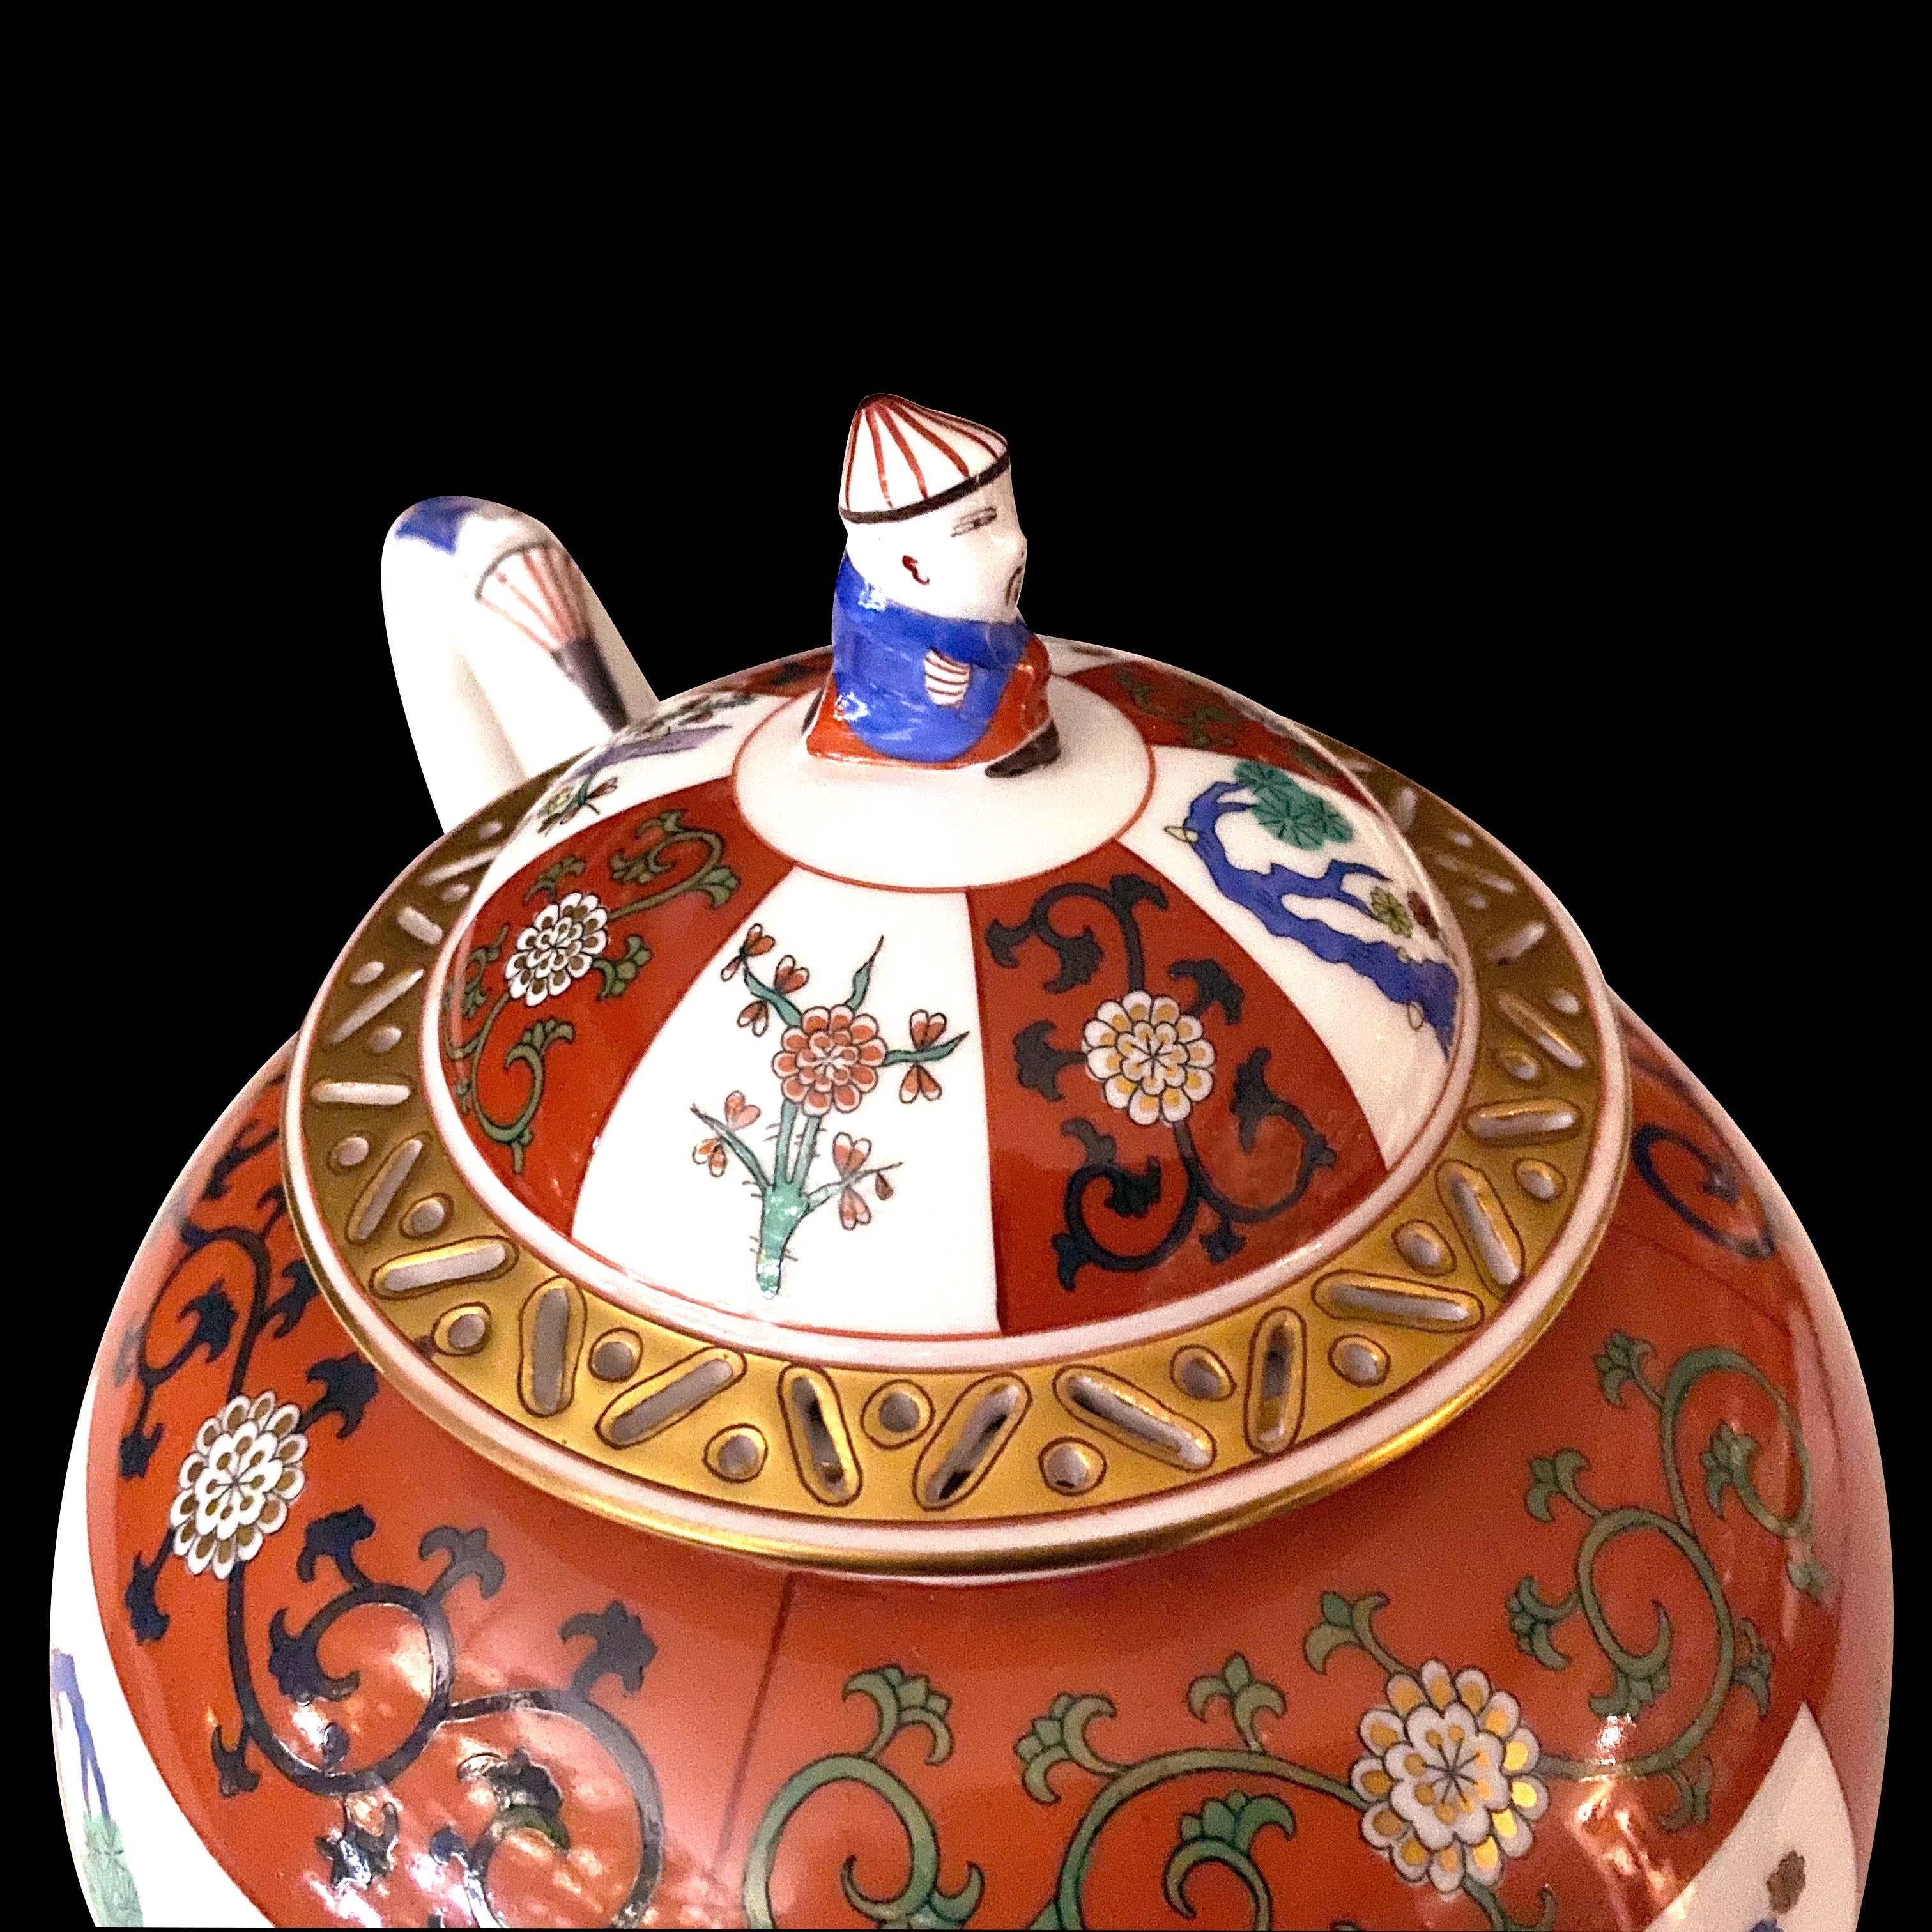 20th Century Godollo Tea Set in Herend Porcelain for Famous Queen Elizabeth